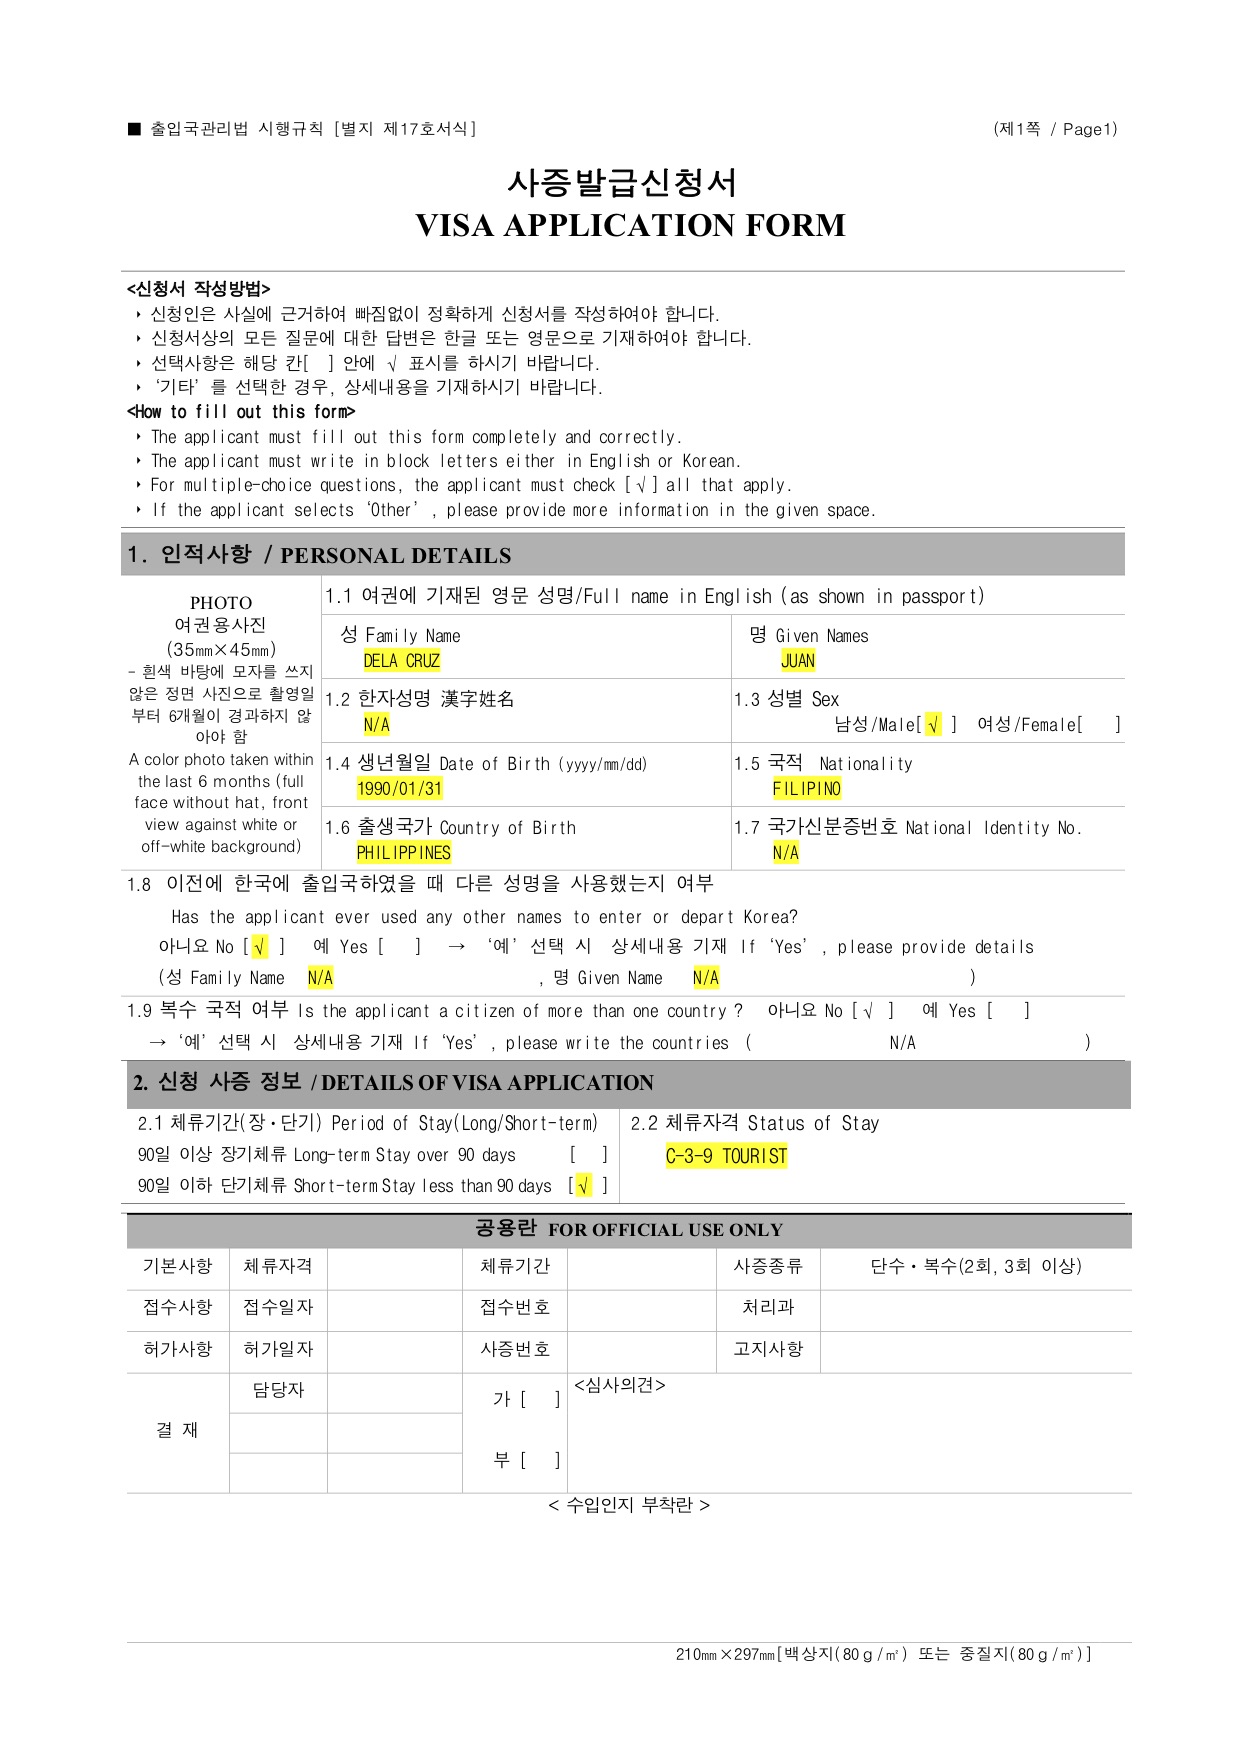 South Korea Visa Application Form - Personal Details